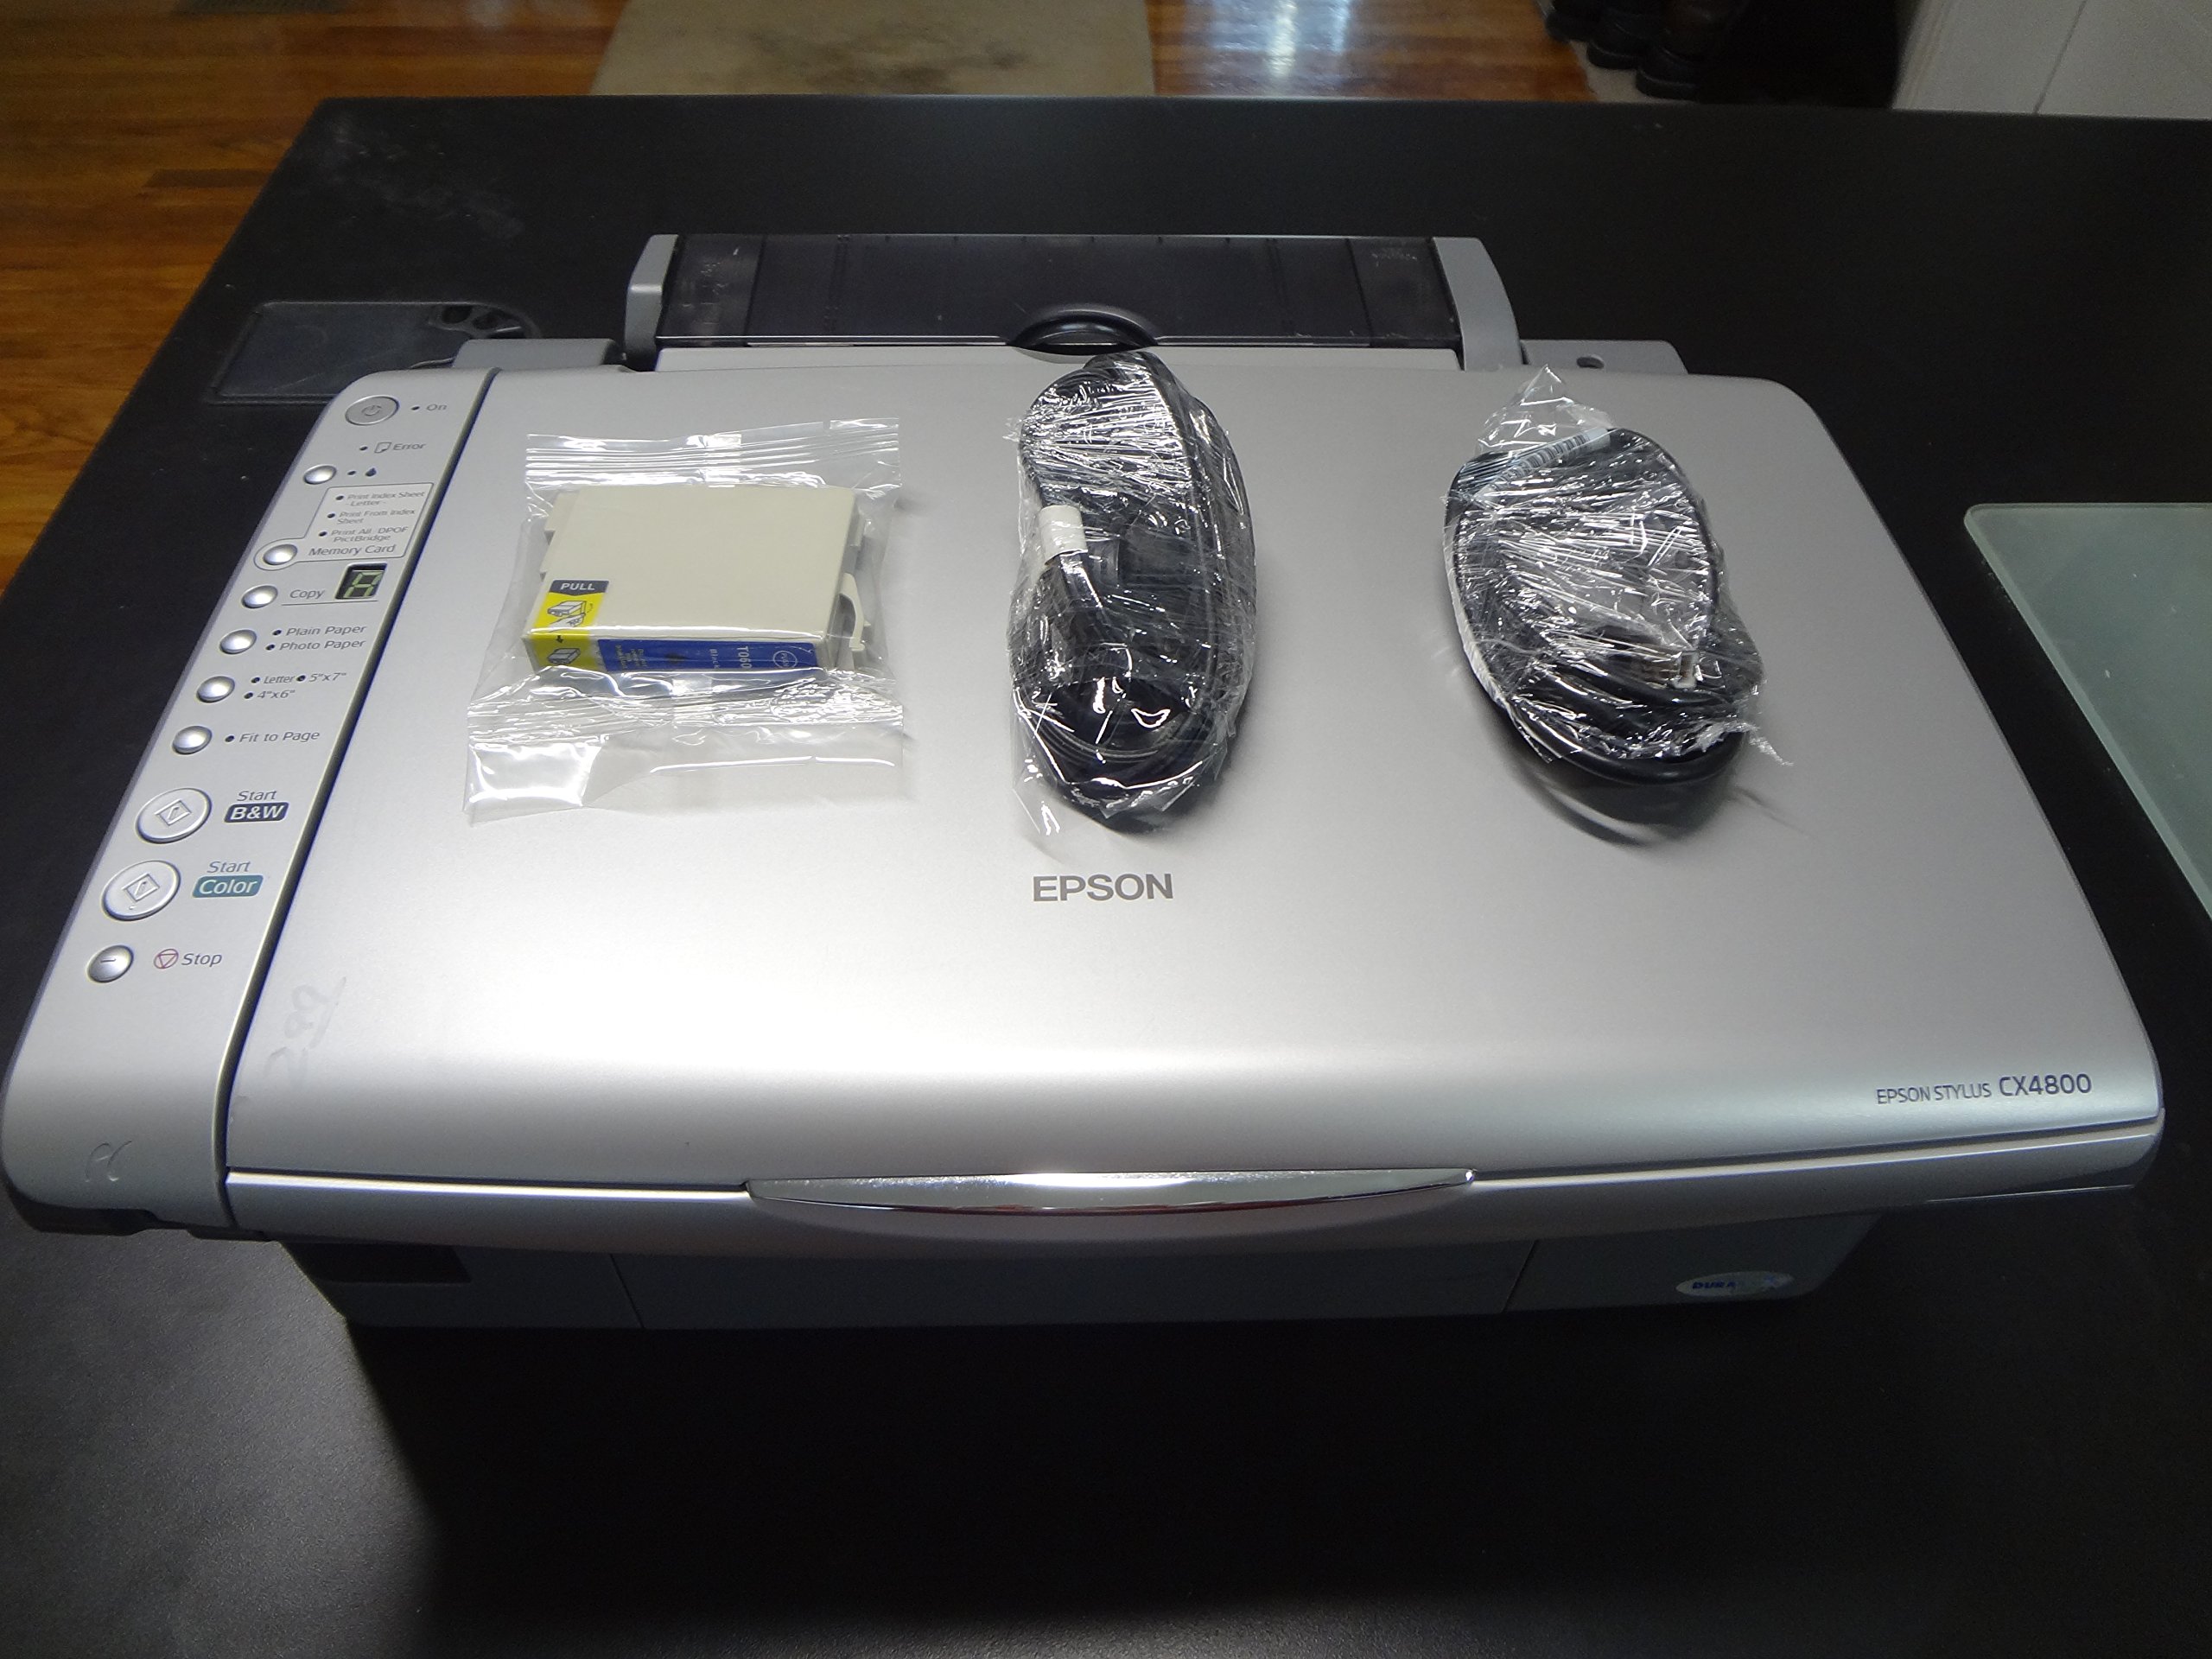 Epson Stylus CX4800 All-in-One Printer, Copier, Scanner